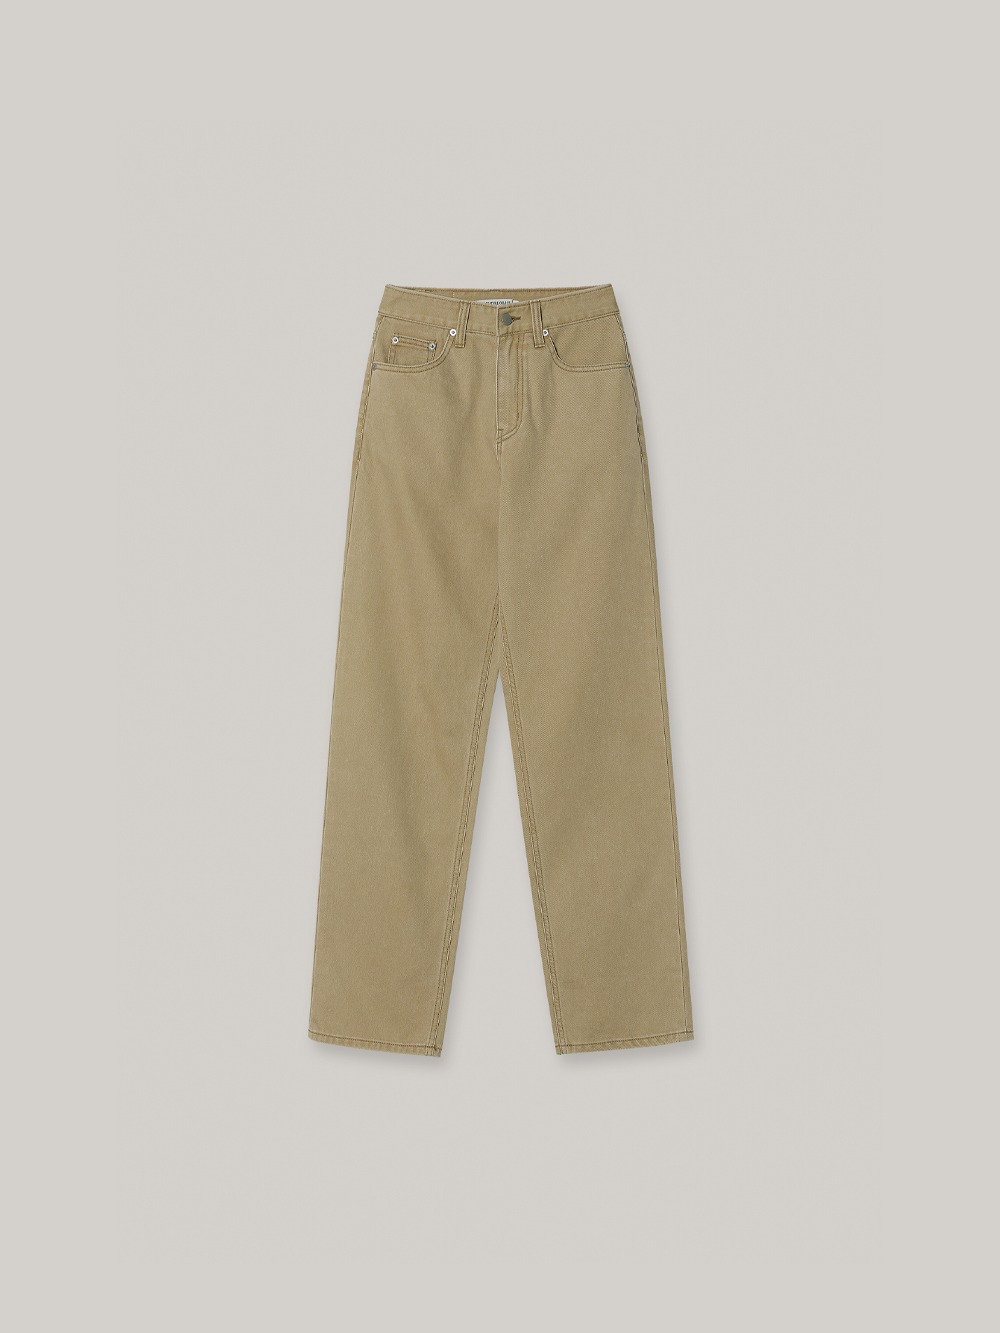 Dyed Denim Pants (beige)